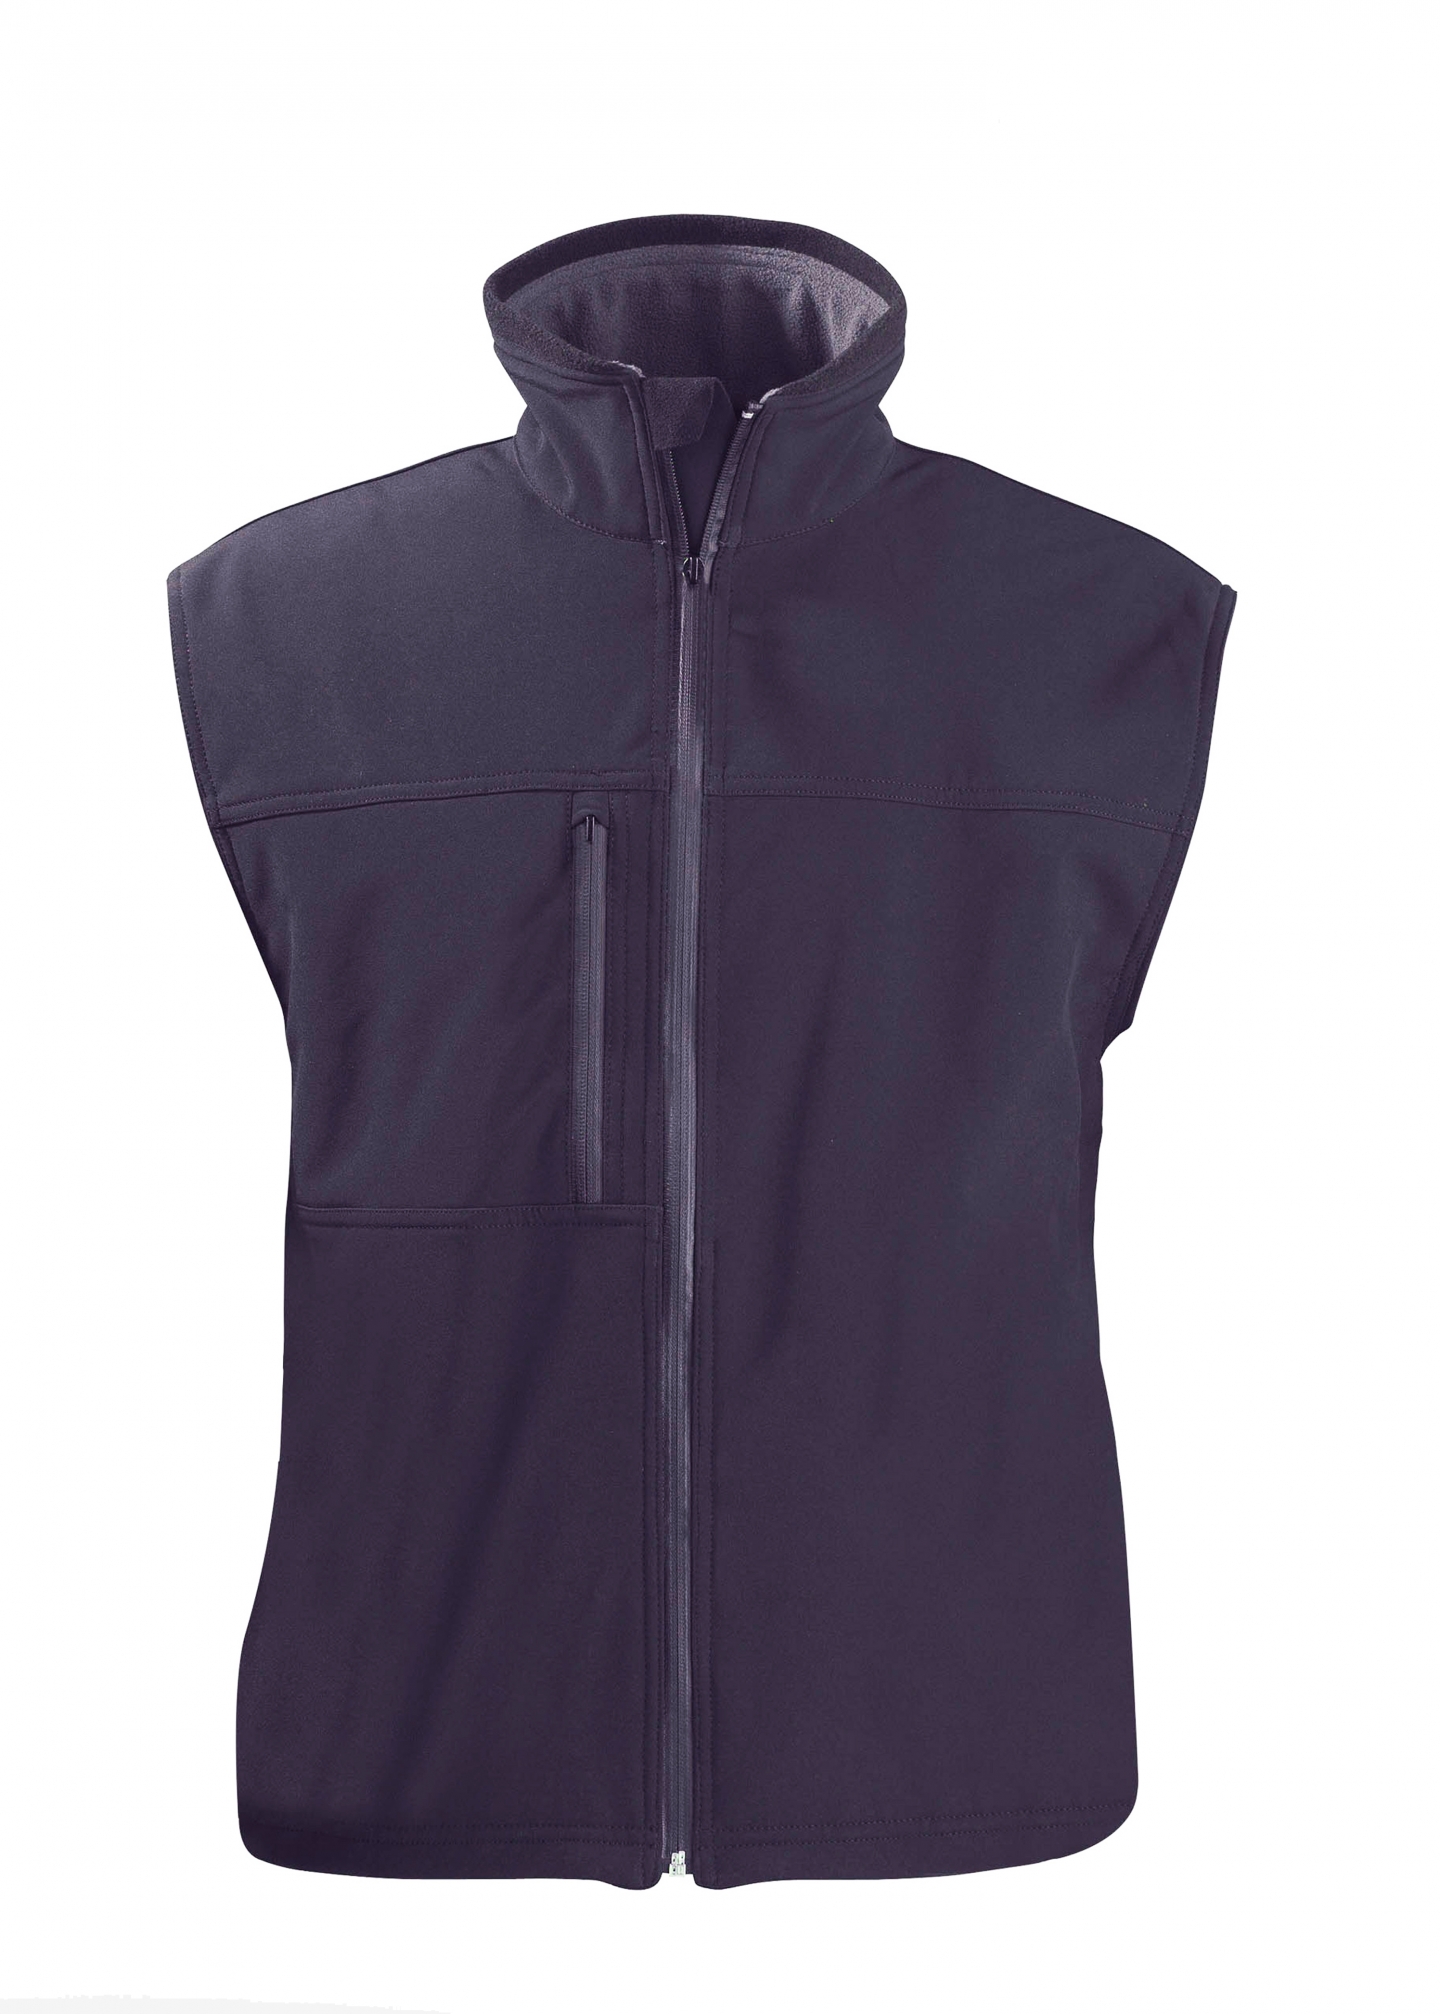 Polar Fleece Jacket manufacturer & supplier in Cambodia - Garment